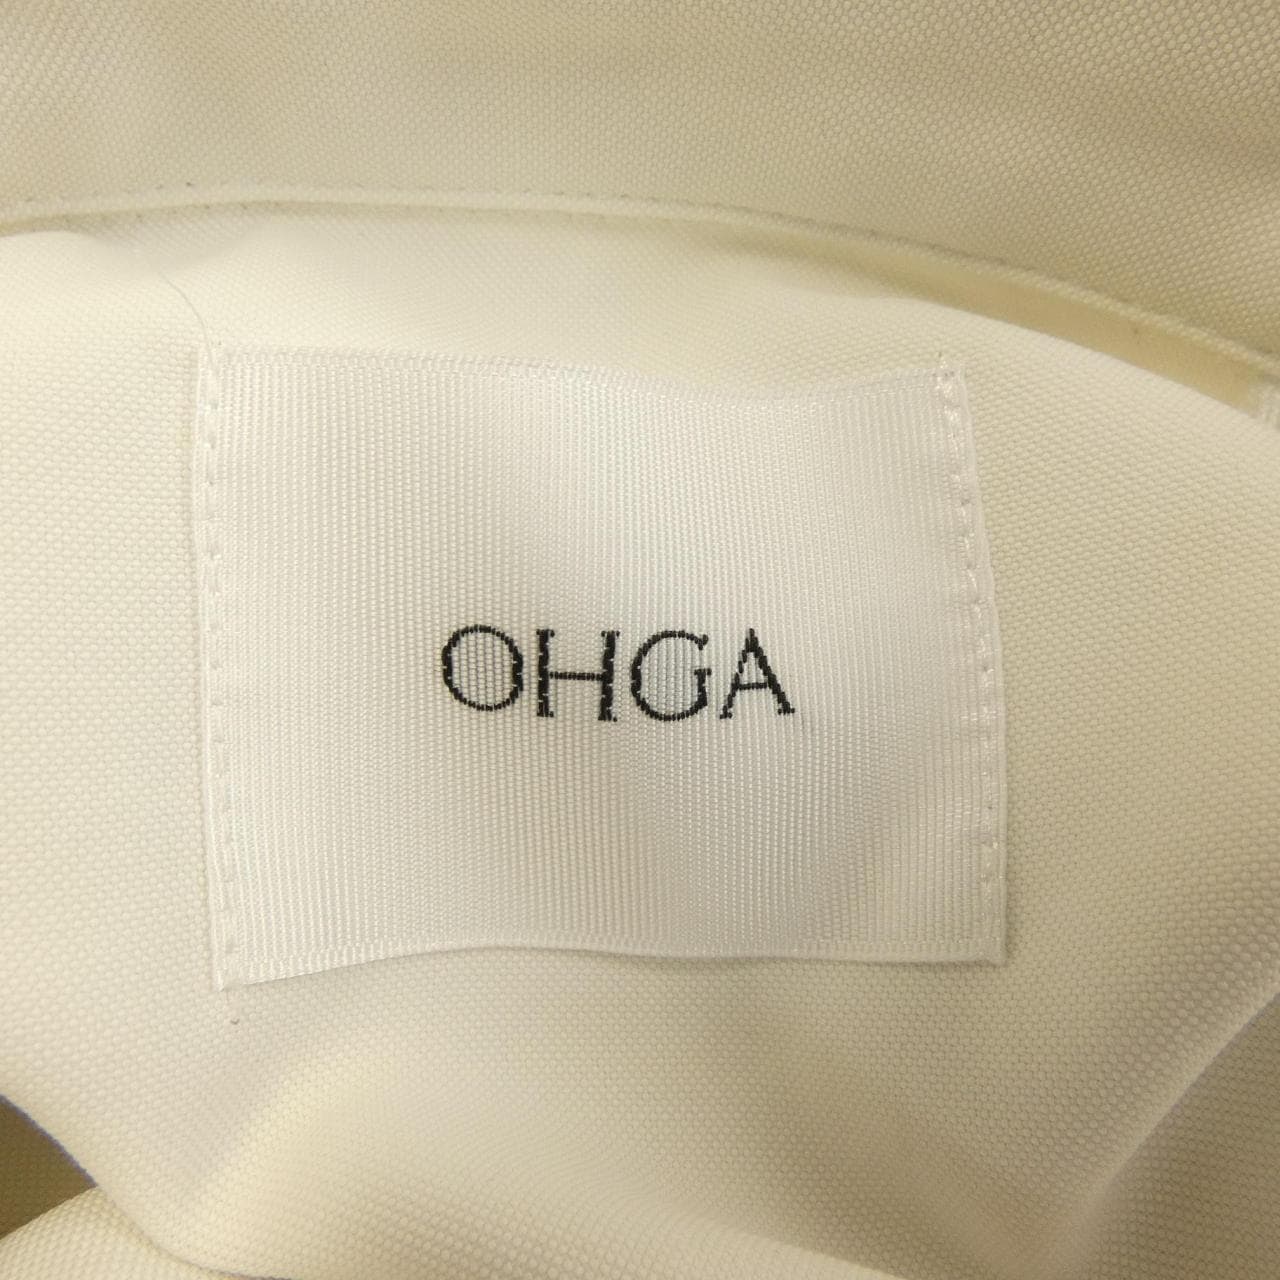 OHGA shirt